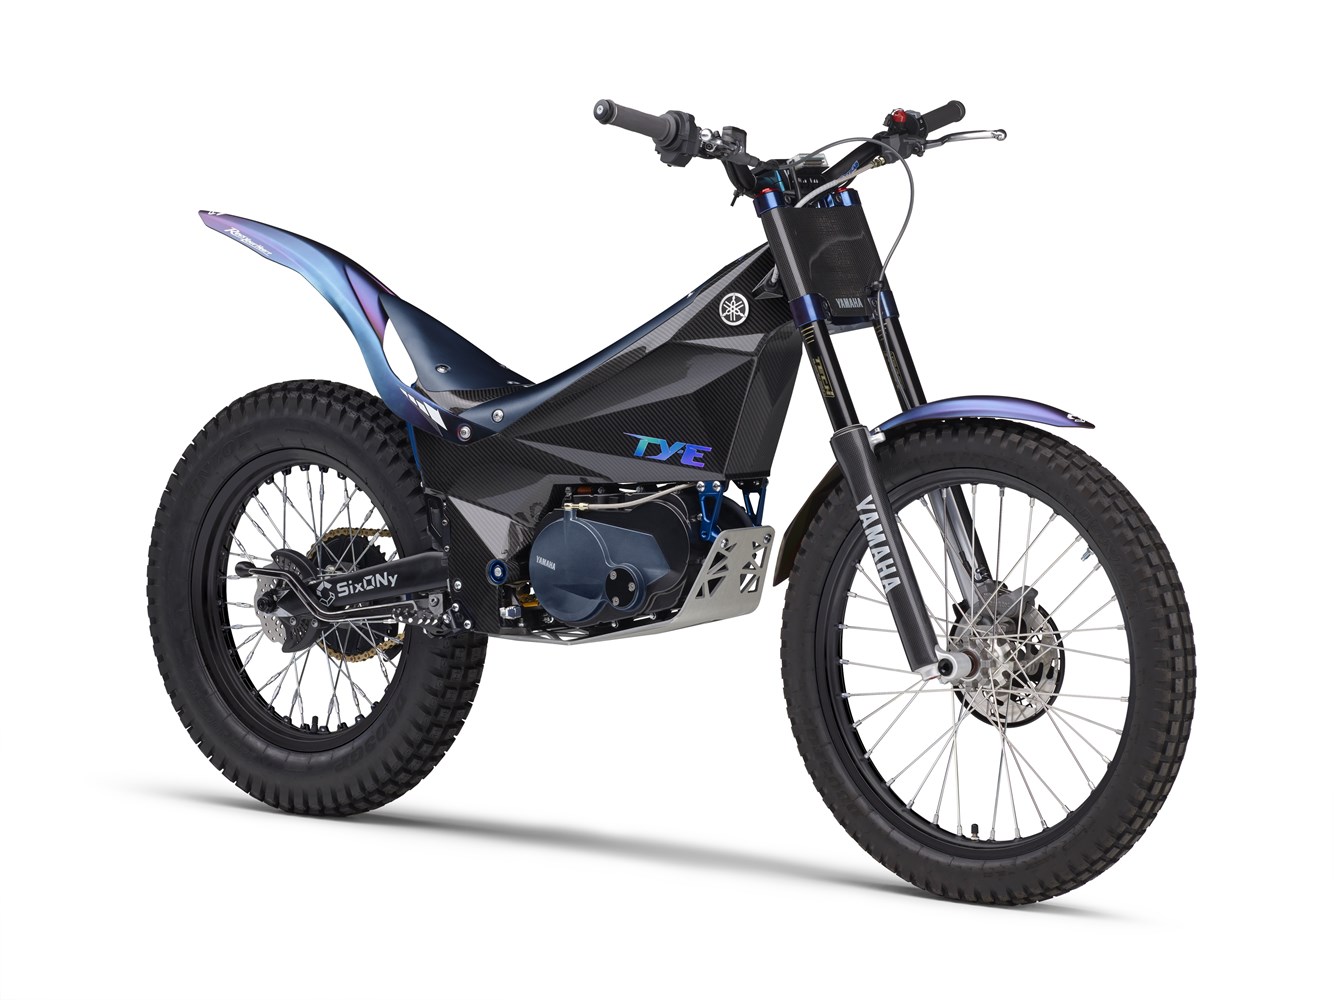 Yamaha new model bike 2020